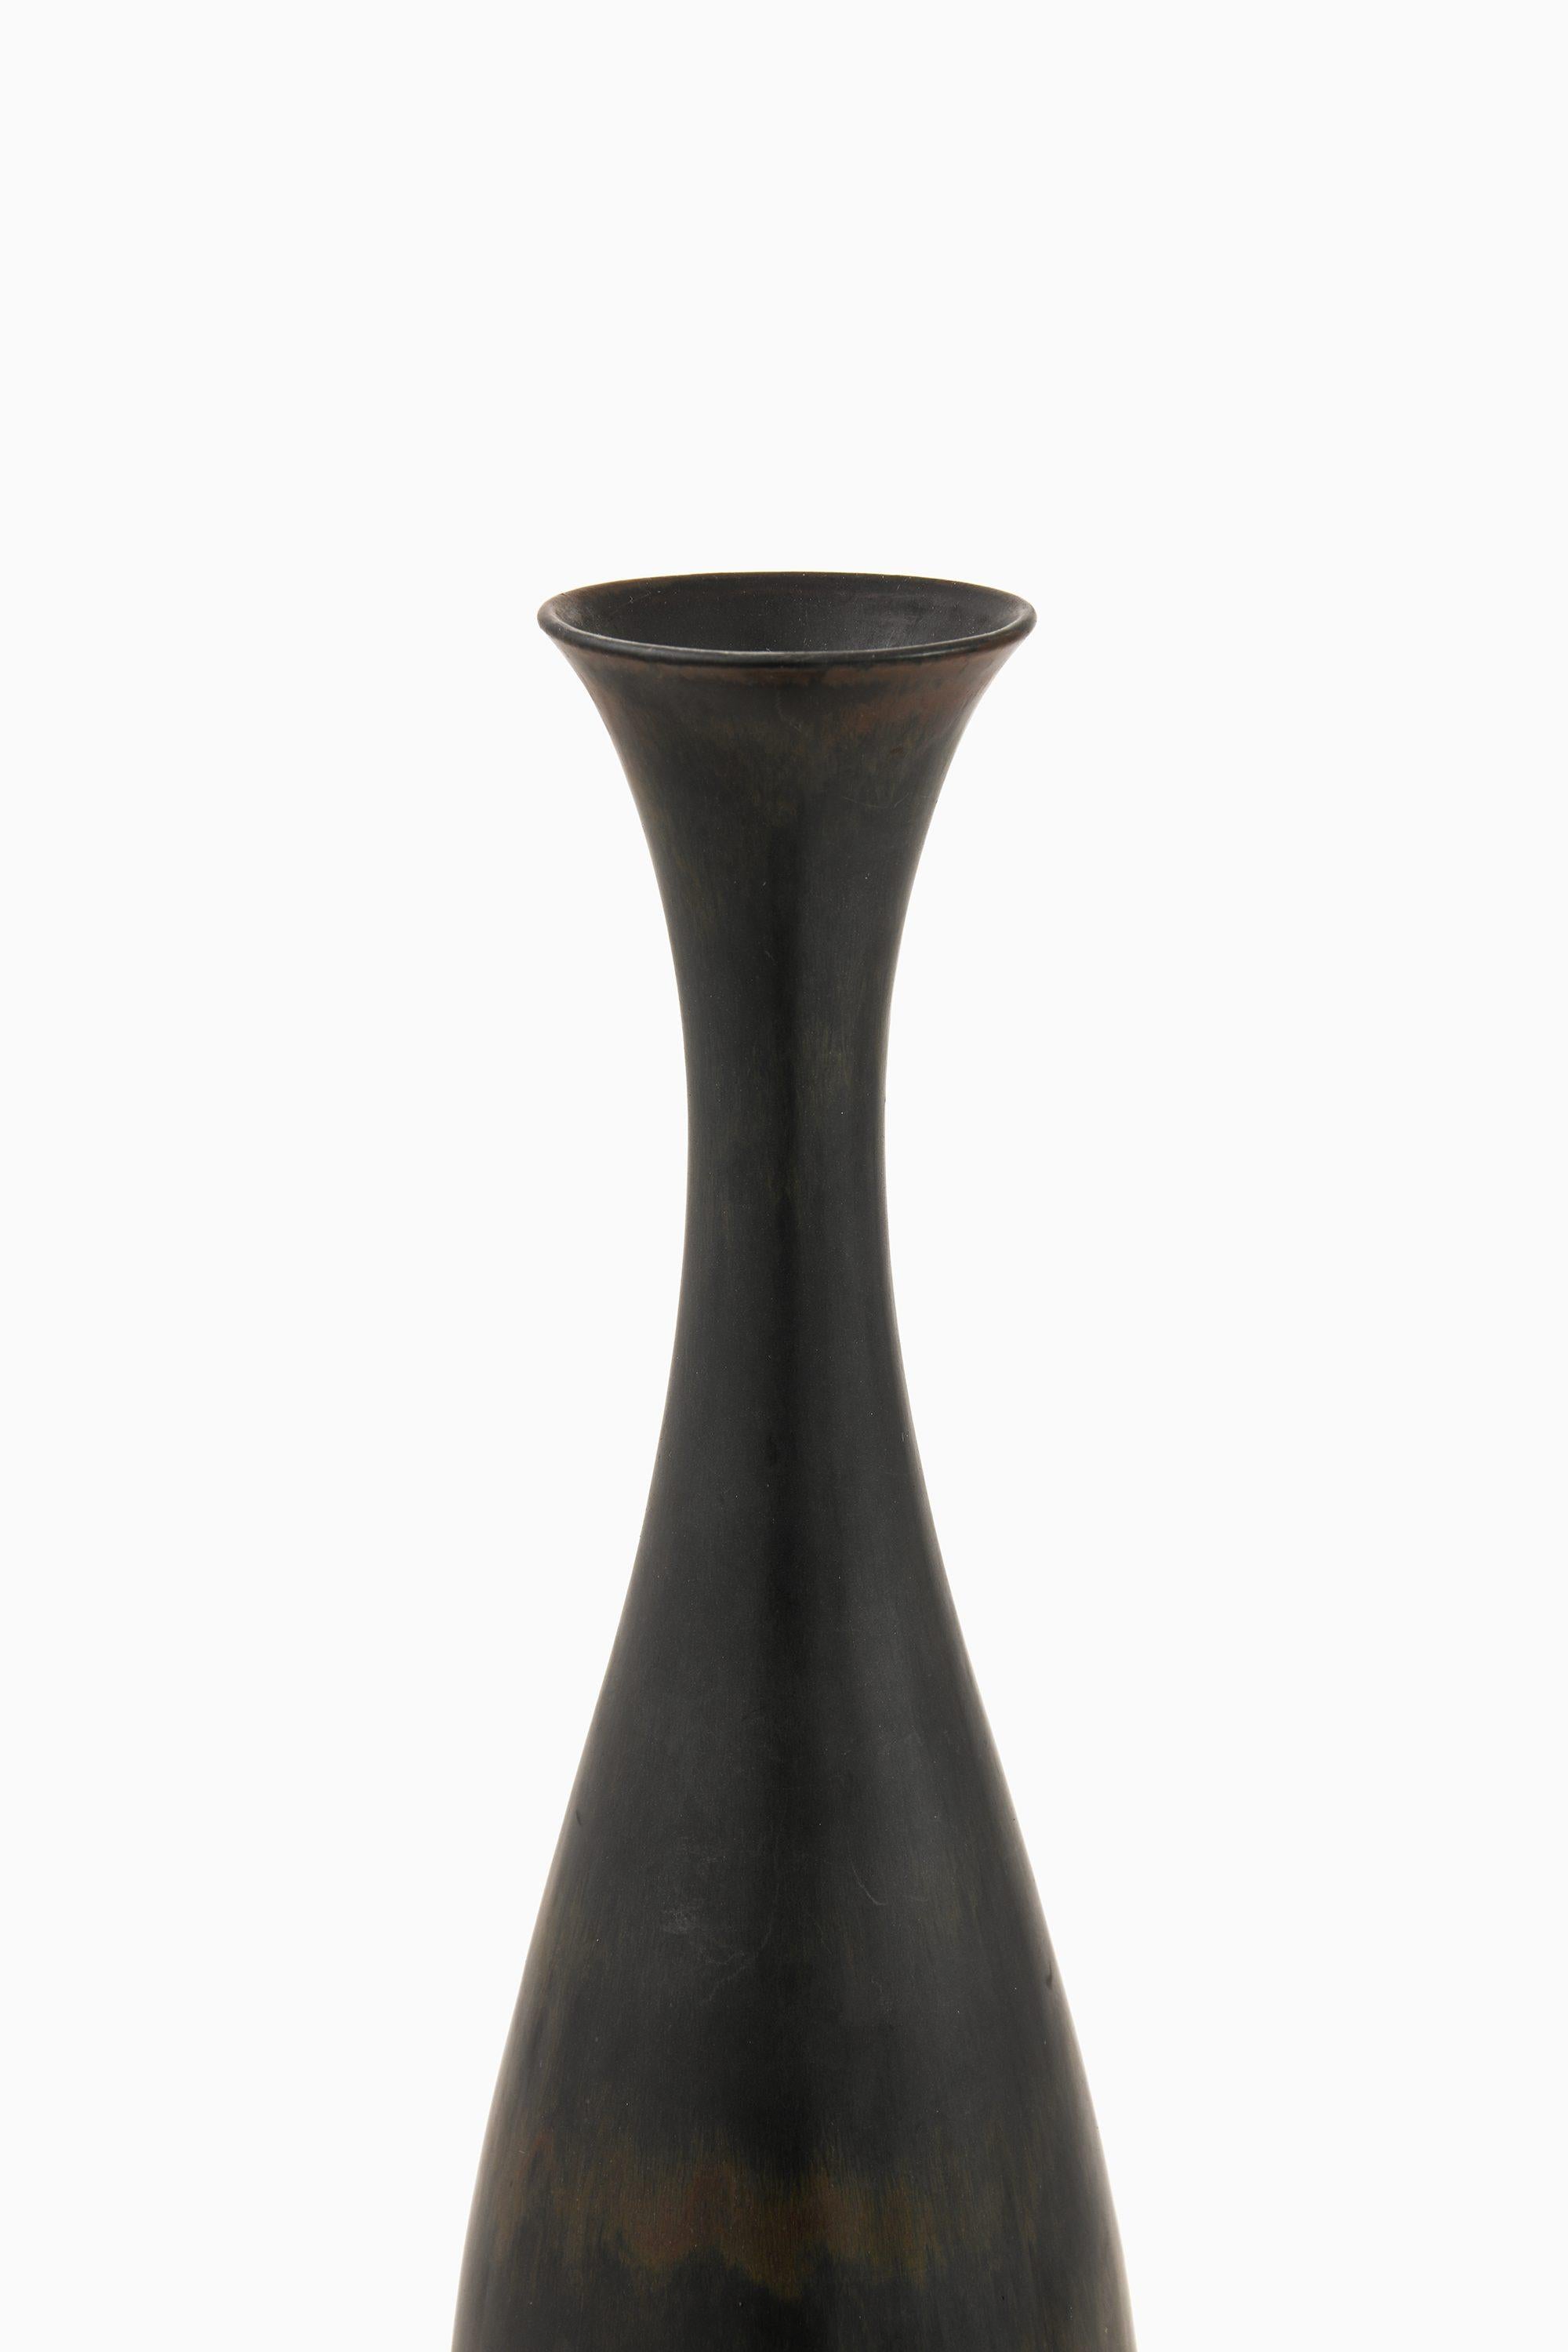 Scandinavian Modern Rare and Tall Ceramic Vase by Carl-Harry Stålhane, 1960's For Sale